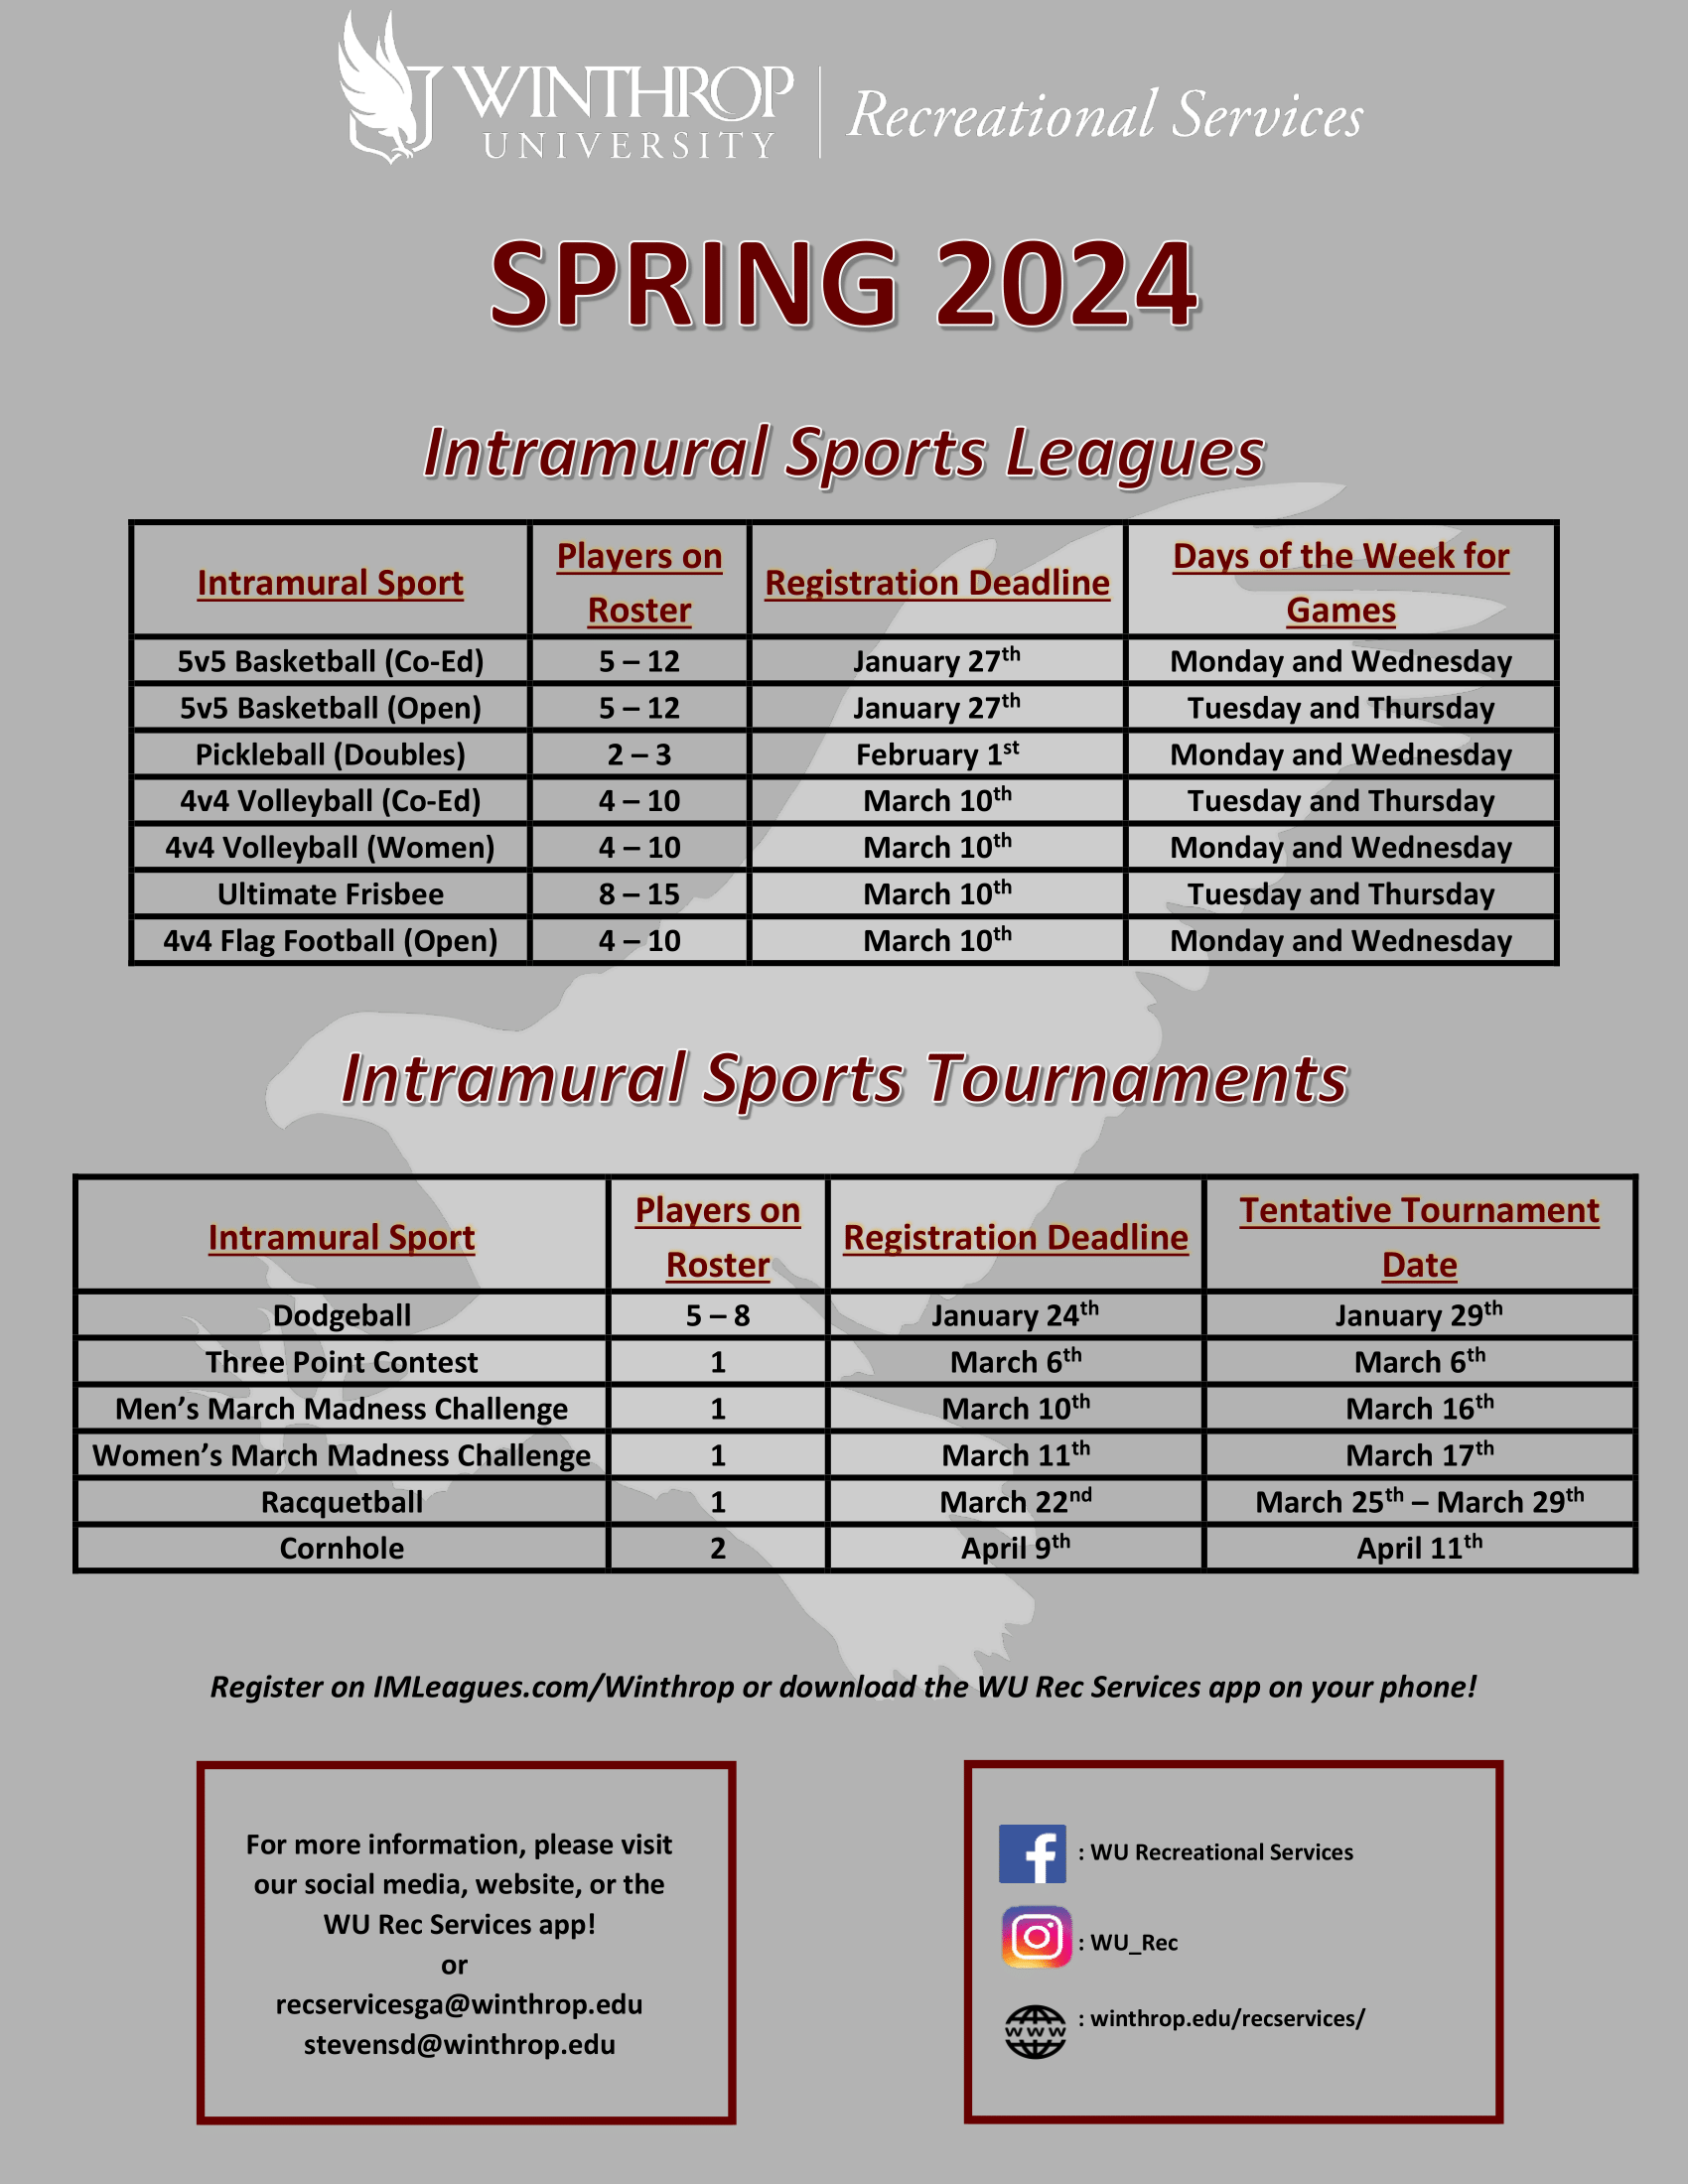 Spring 2024 Intramural Sports schedule